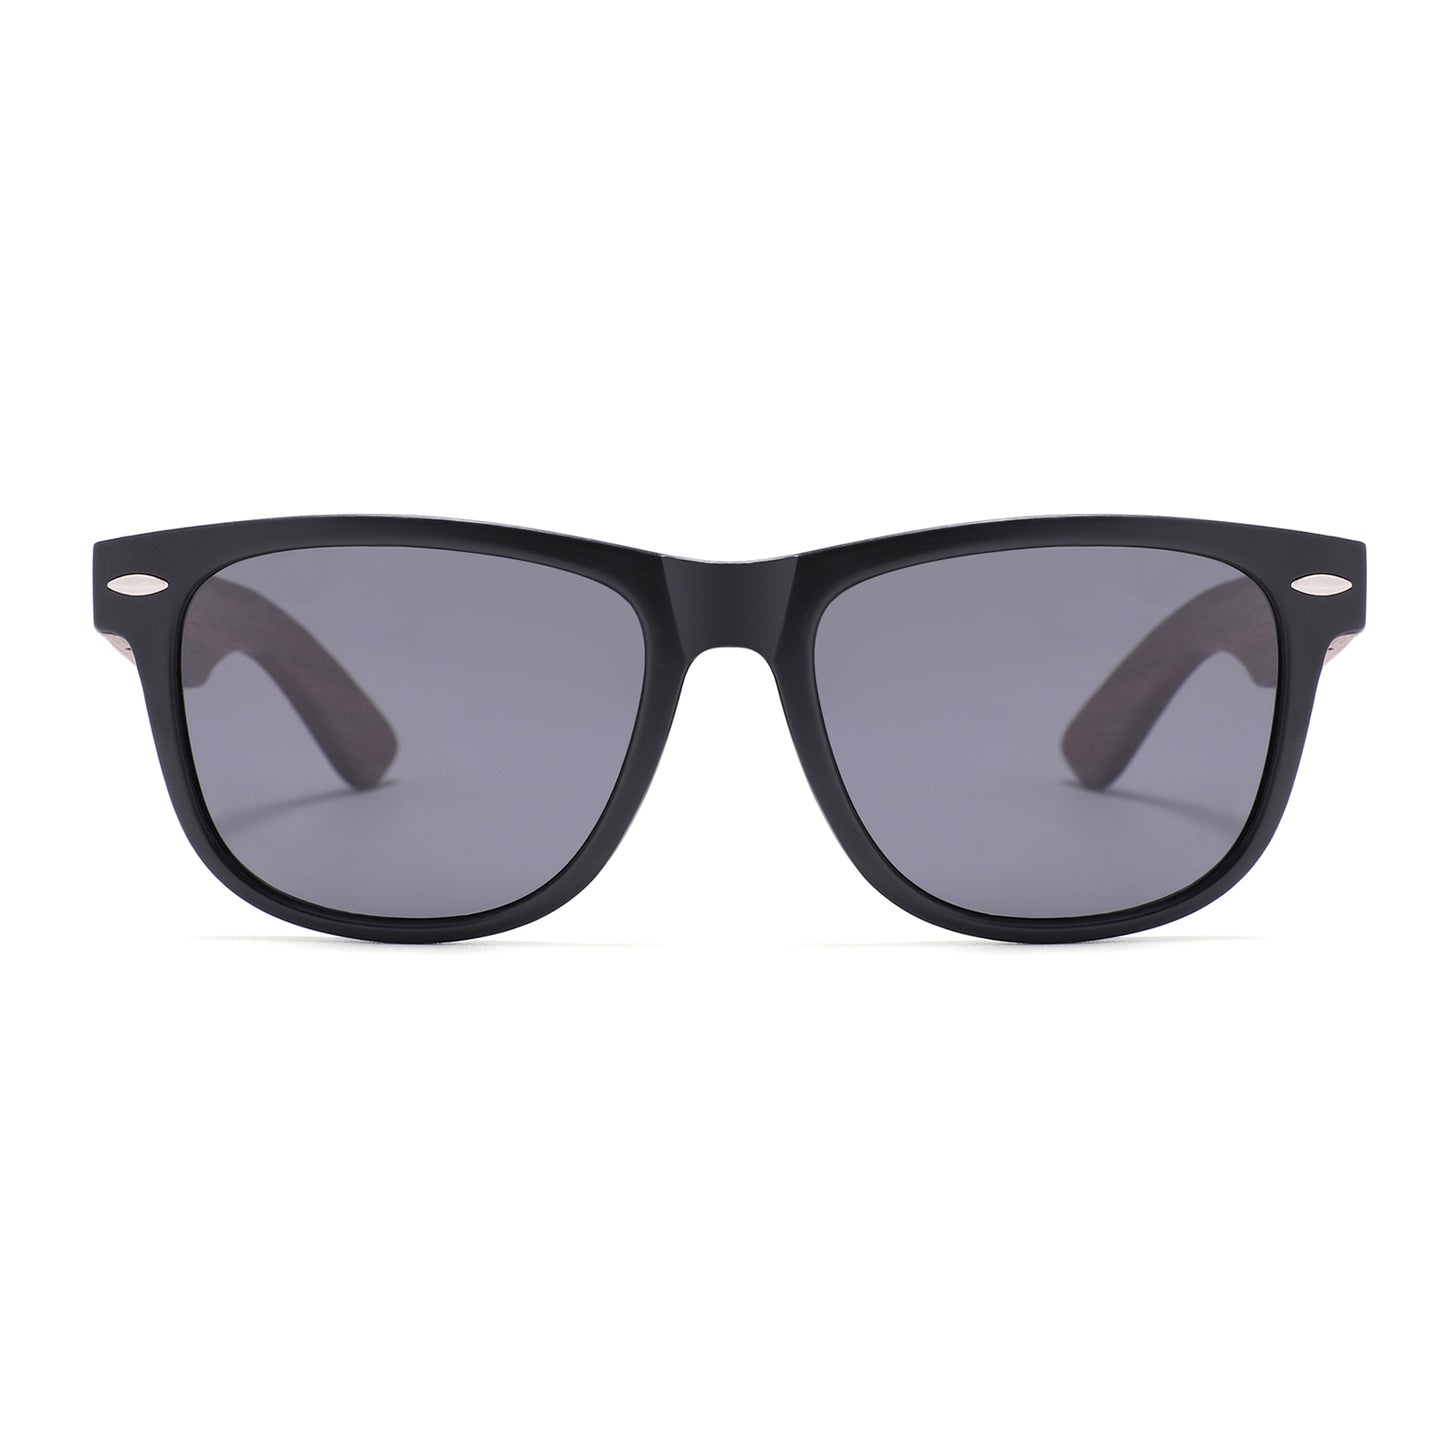 VAYA MATT BLACK Sunglasses Polarised Grey Lens Wooden Arms